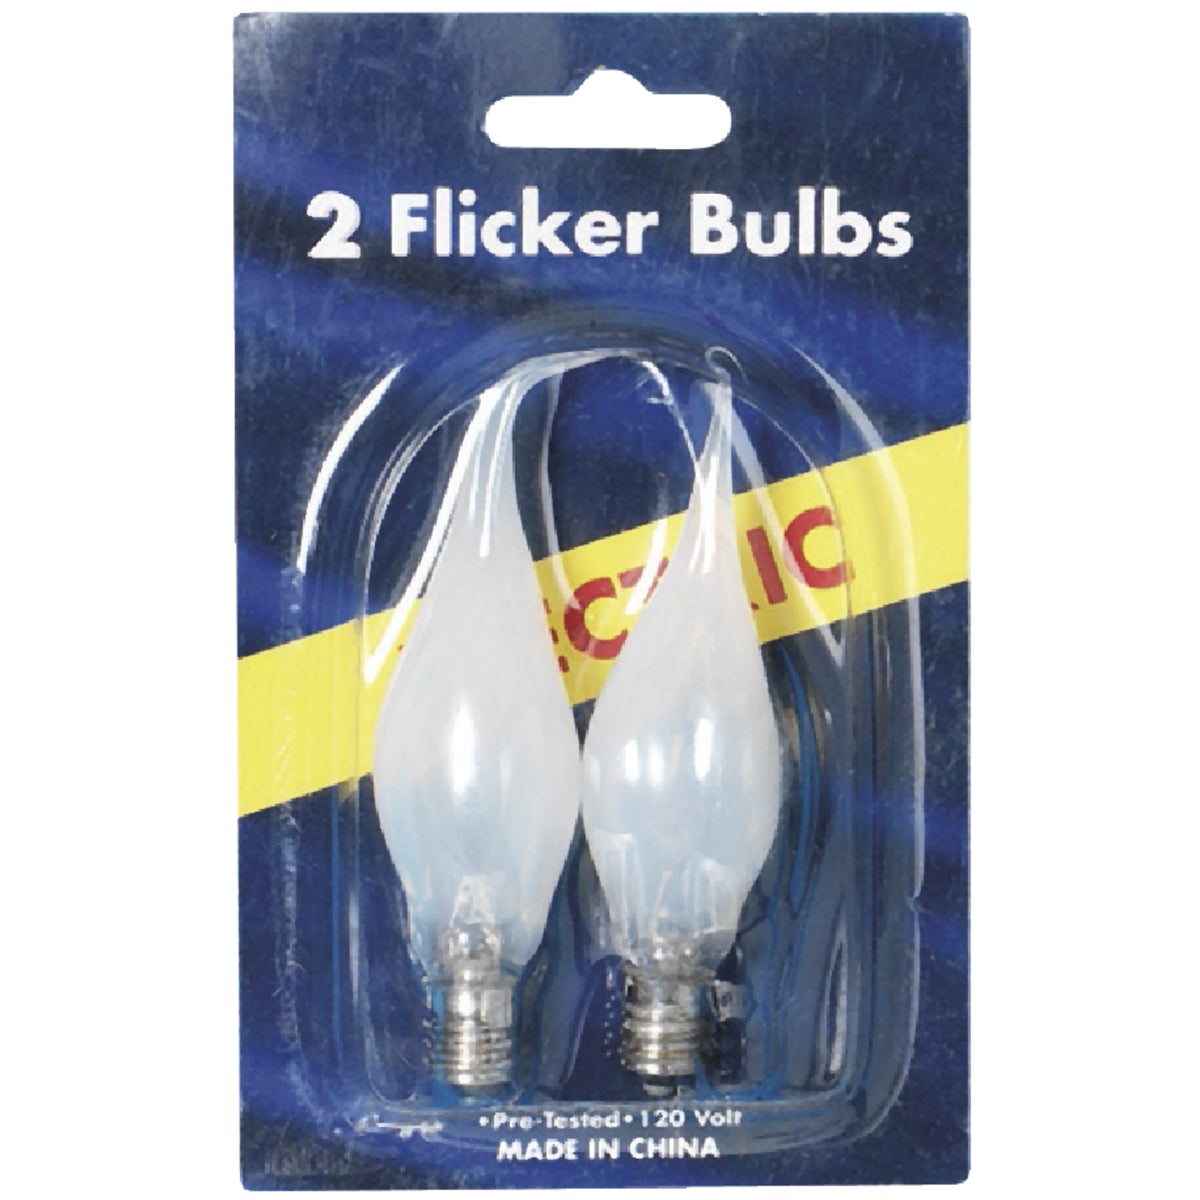 Item 902973, C7 flicker flame light bulb.